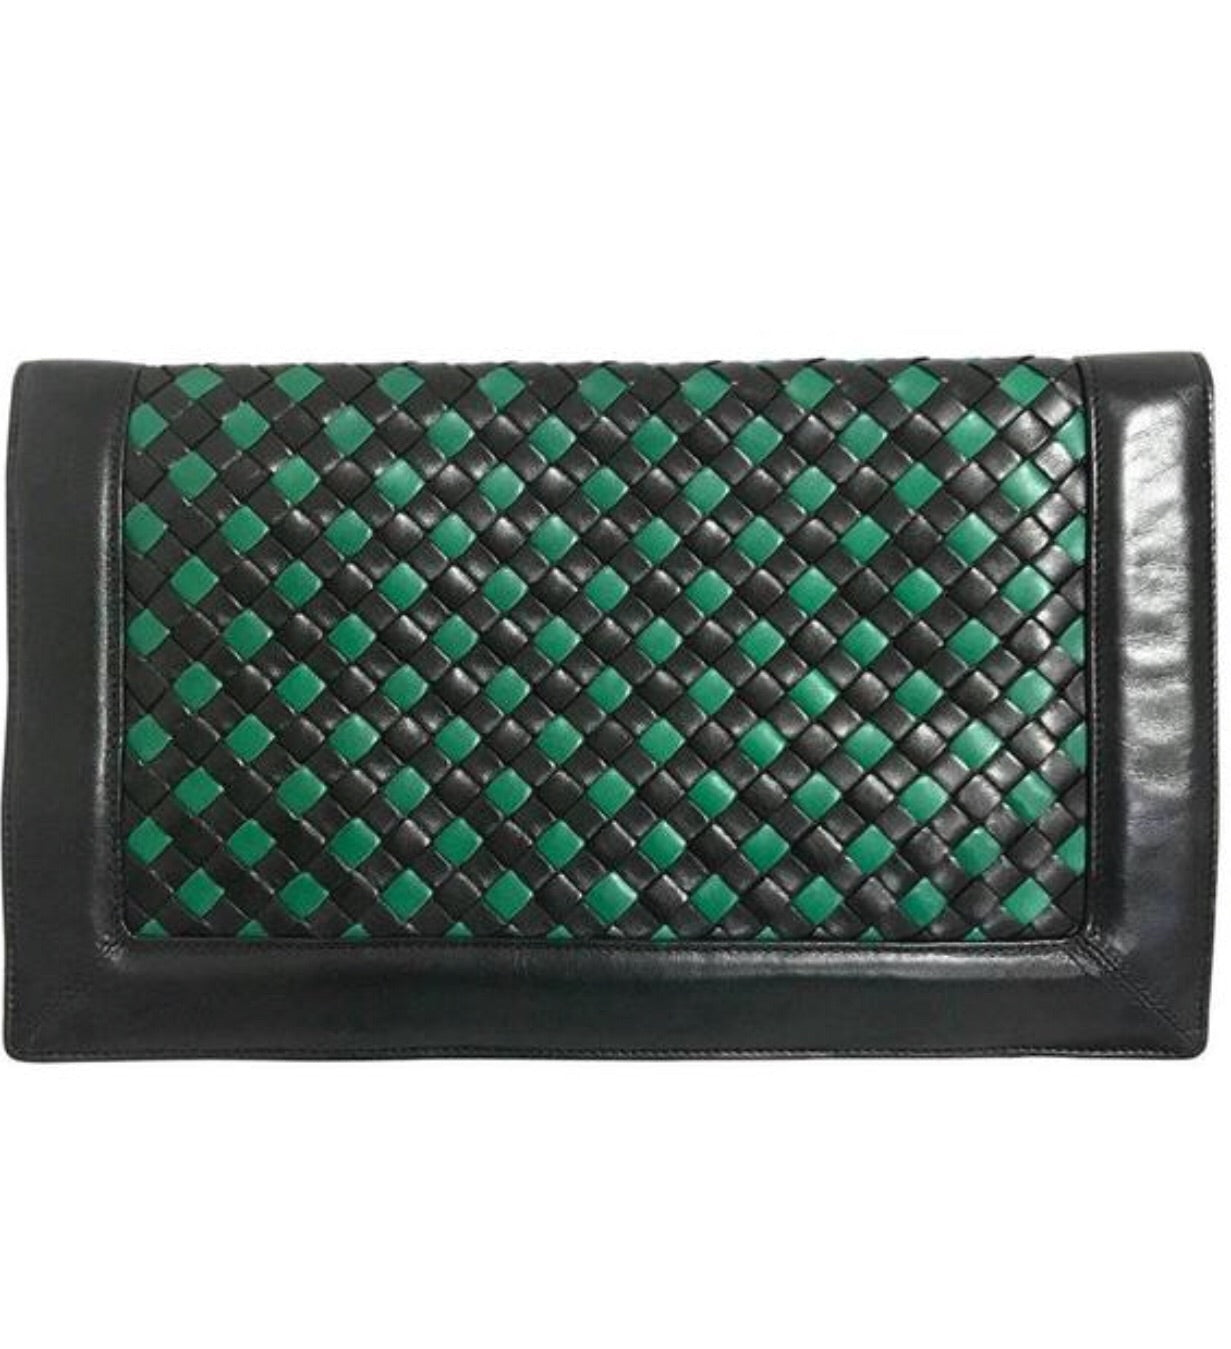 W9. Vintage Bottega Veneta intrecciato navy and green woven lamb leather large clutch bag, purse. Unisex. 050926